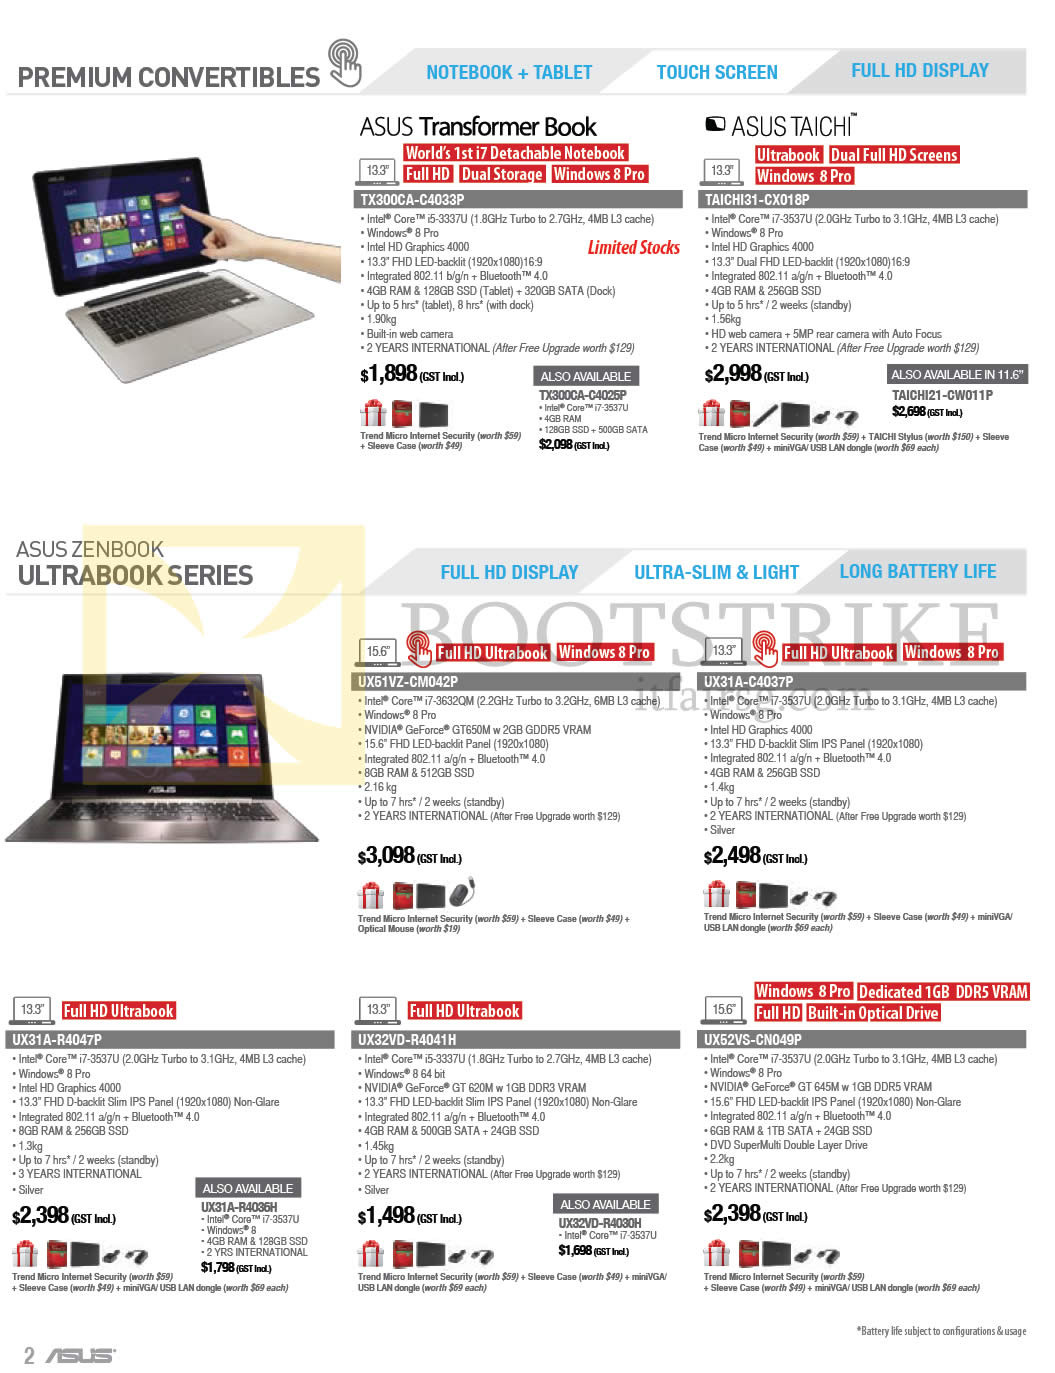 COMEX 2013 price list image brochure of ASUS Notebooks Transformer Book TX300CA-C4033P, TAICHI31-CX018P, Zenbook UX51VZ-CM042P, UX31A-C4037P, UX31A-R4047P, UX32VD-R4041H, UX52VS-CN049P